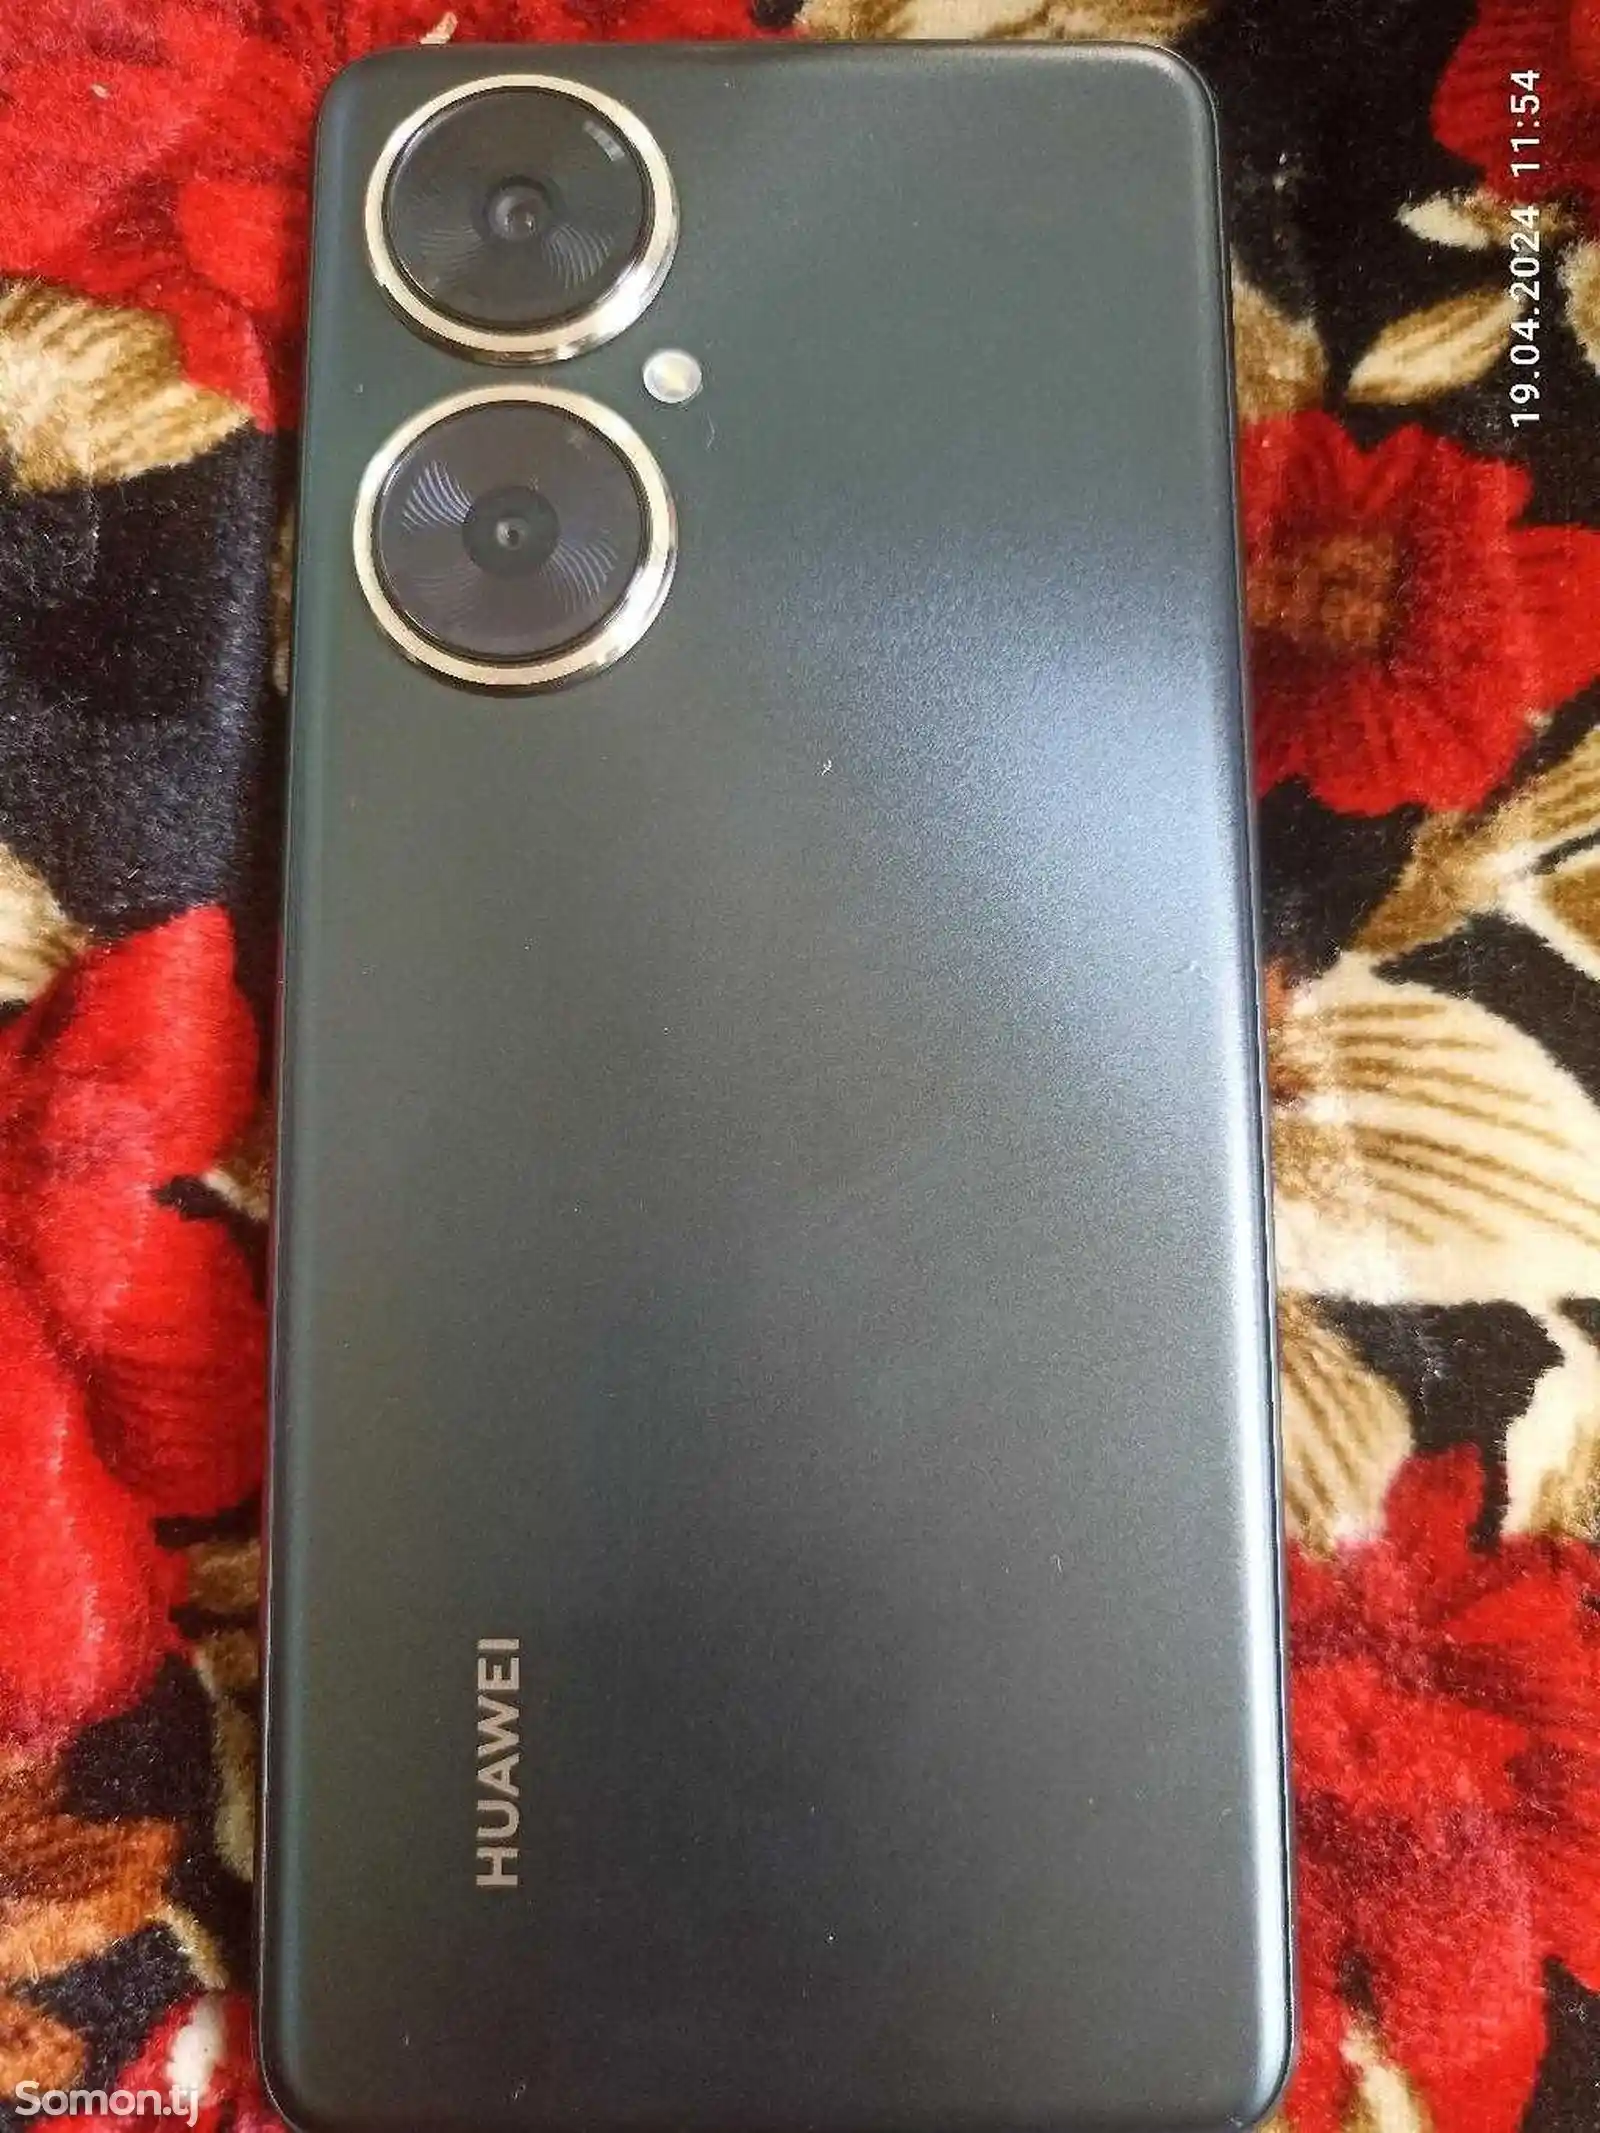 Huawei Nova 11i-1